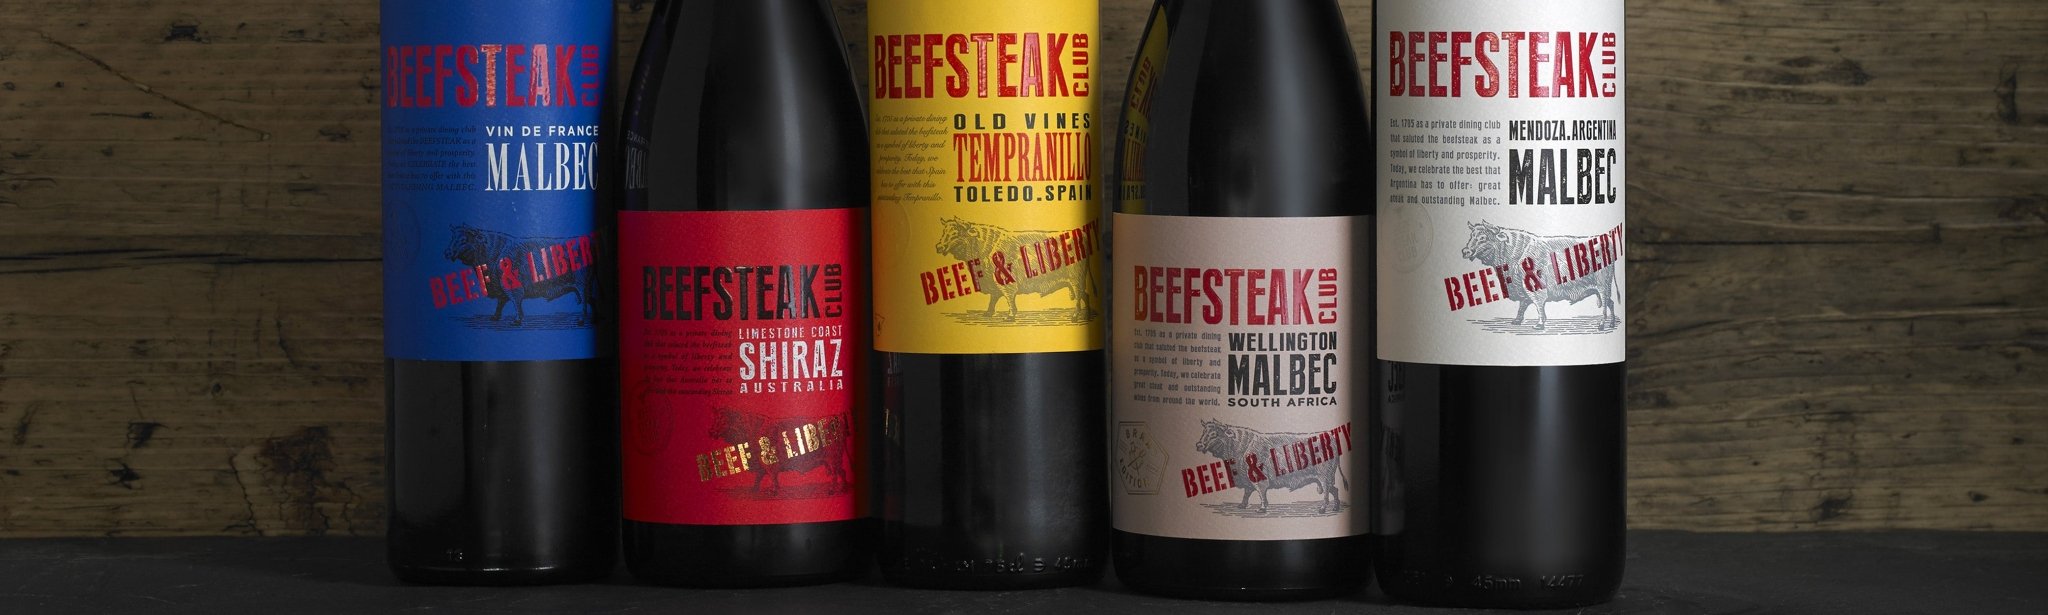 Beefsteak - The Bottle Club